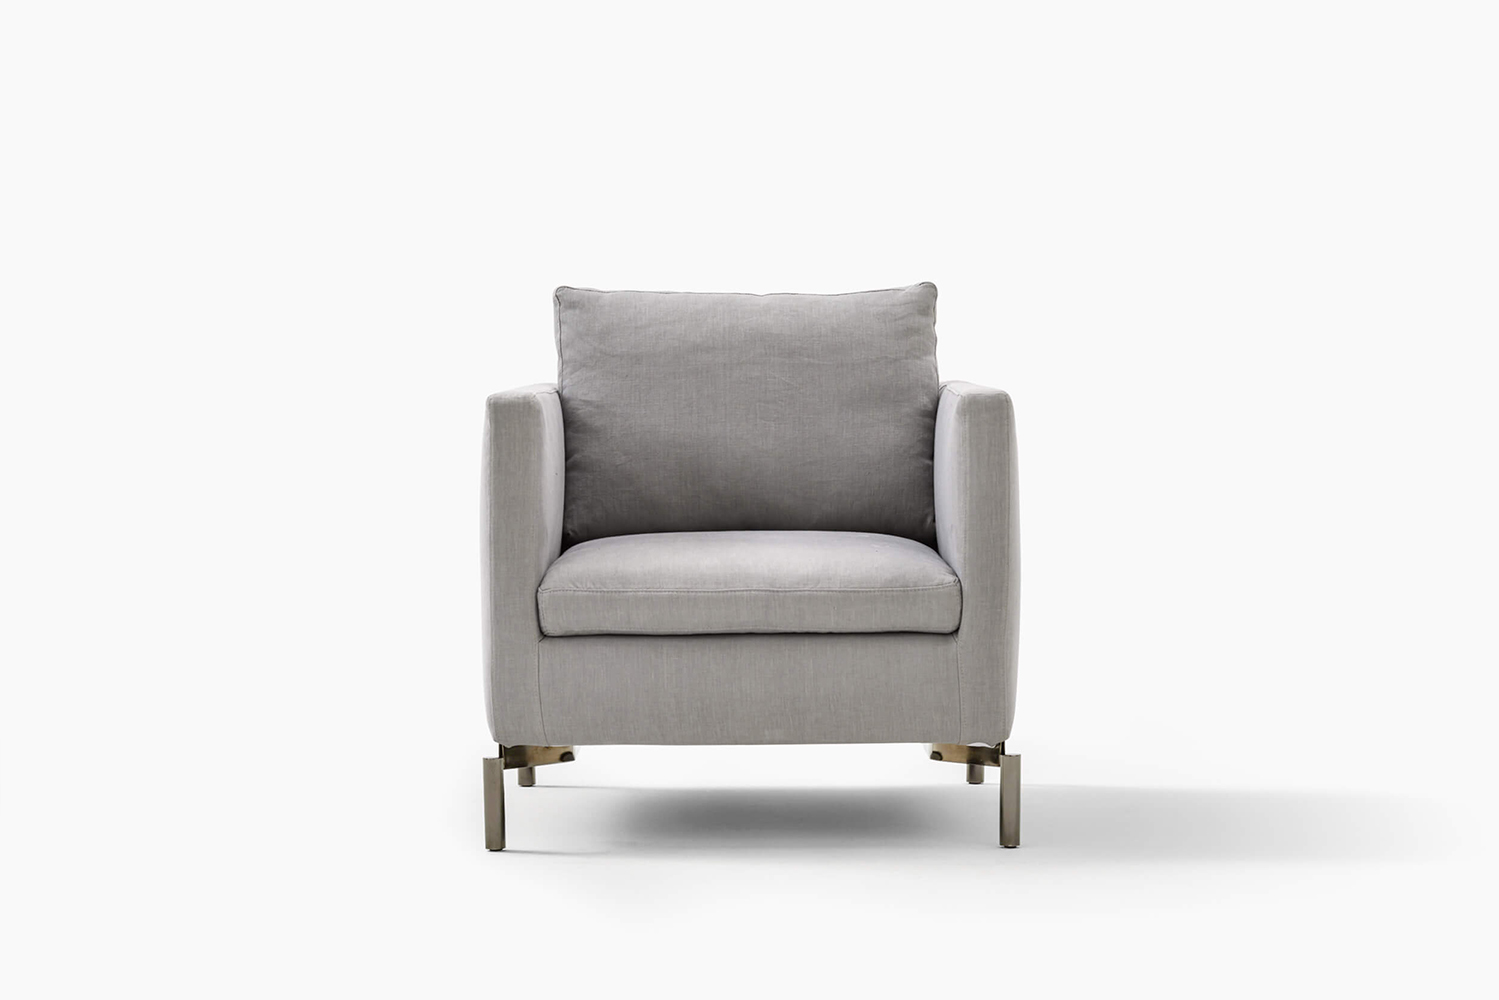 Reef luxury Italian modern armchair by Novamobili. Sold by Krieder UK.